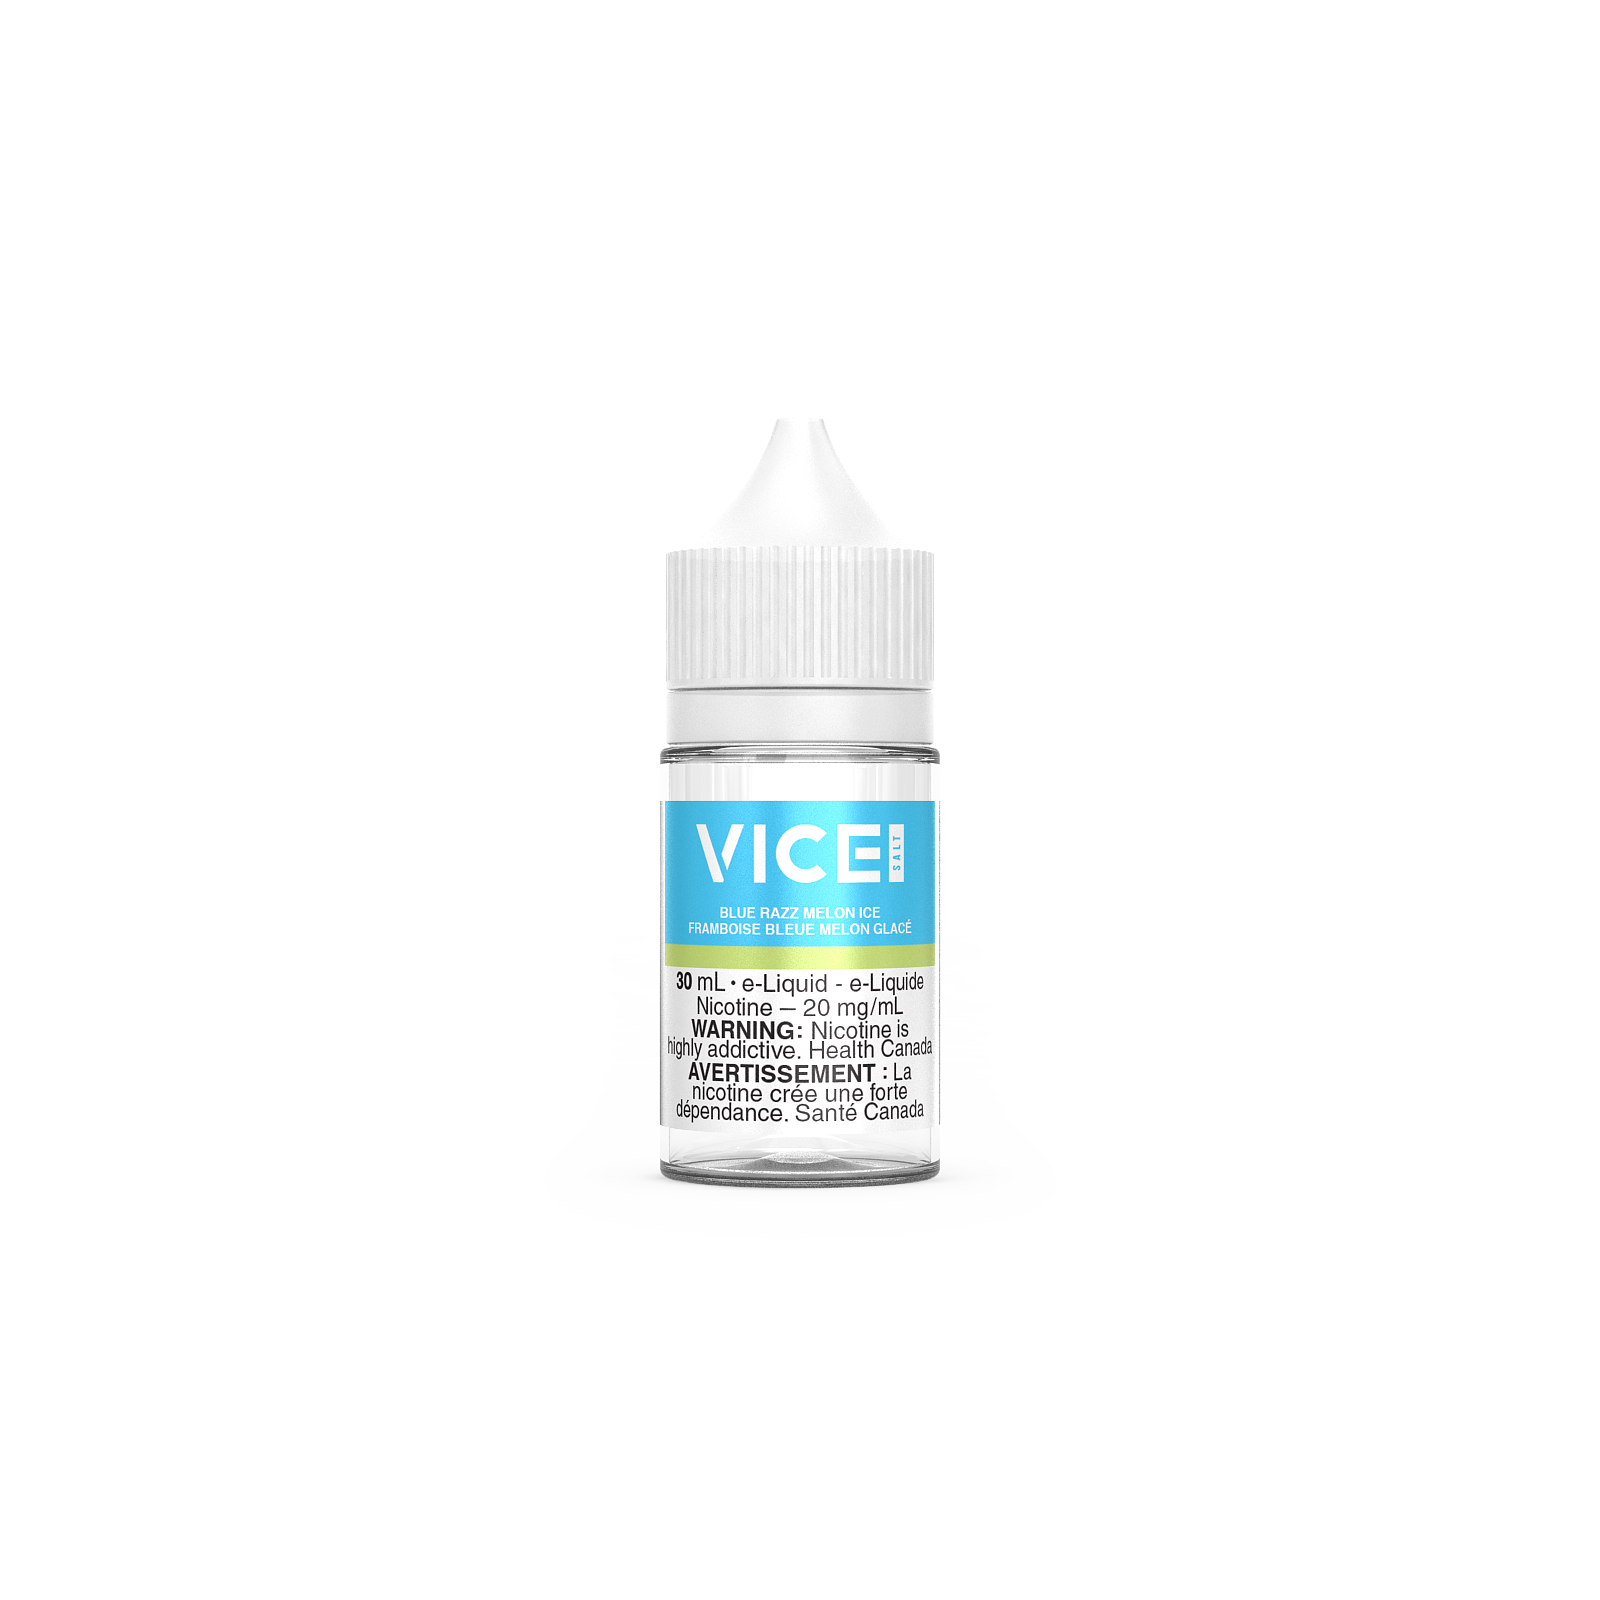 Vice Salt - BLUE RAZZ MELON ICE